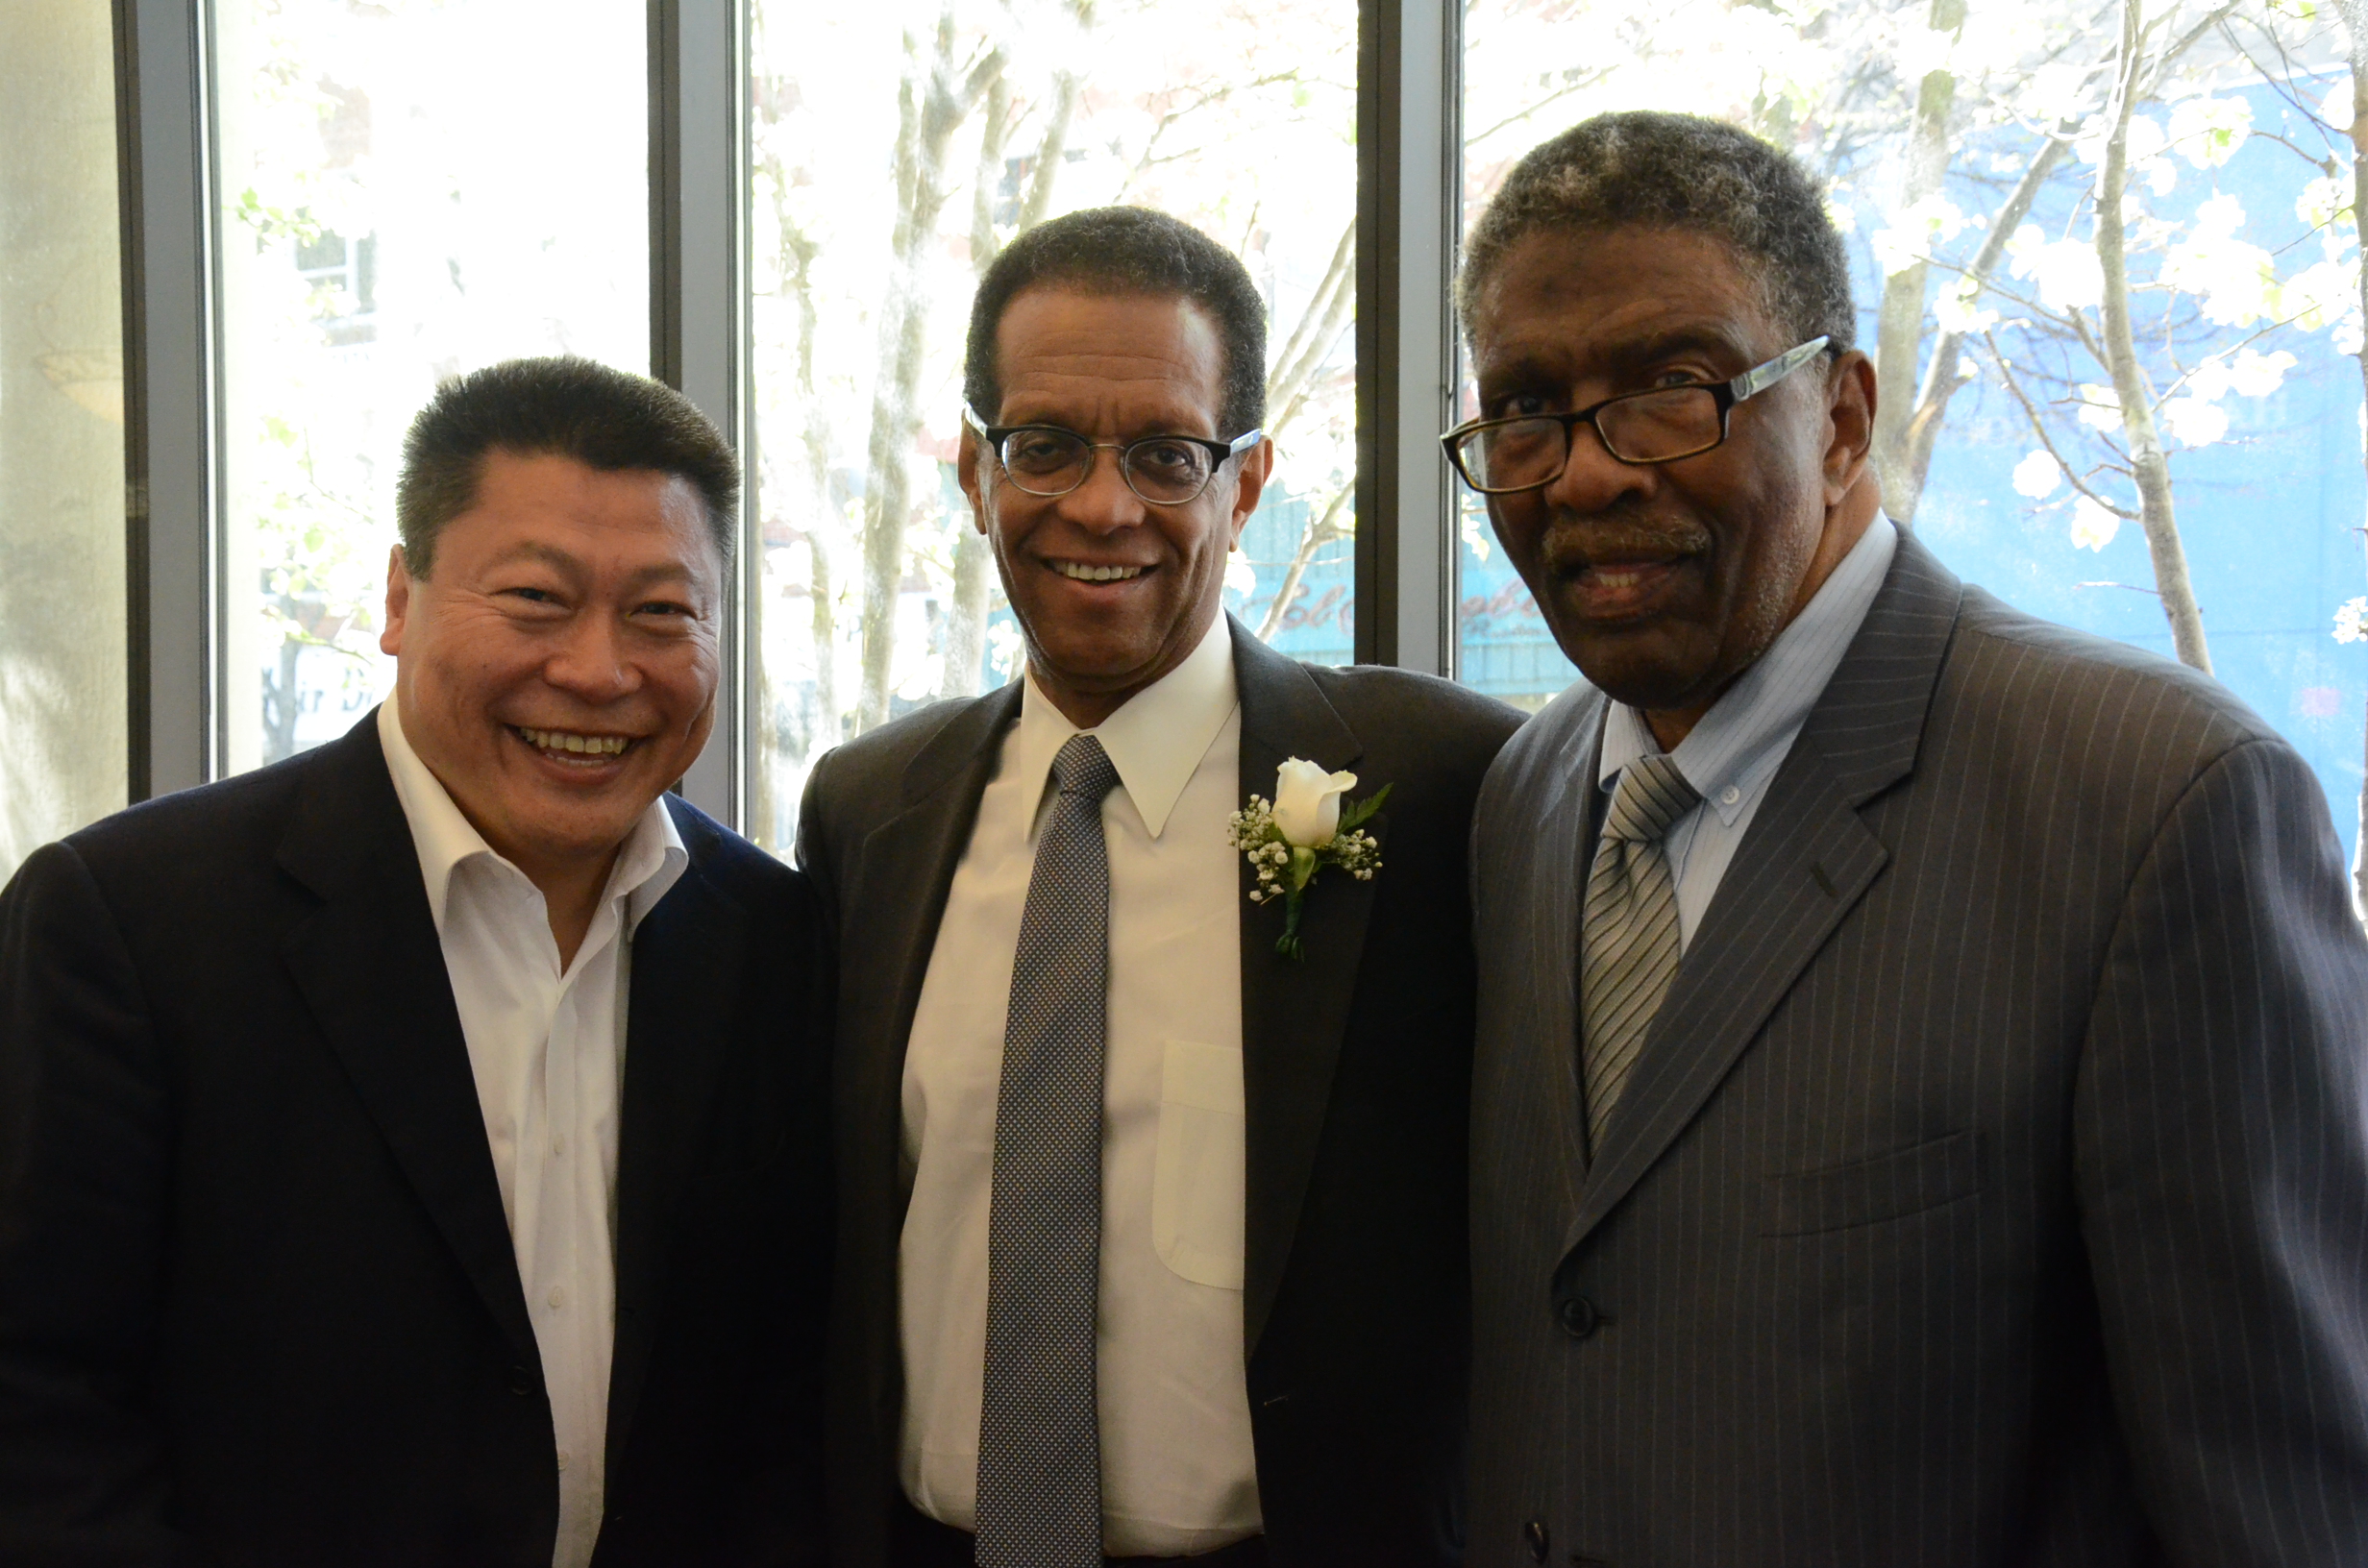  Senator Tony Hwang, Keynote Speaker Bob Herbert and President and CEO of ABCD, Inc. Charles Tisdale 